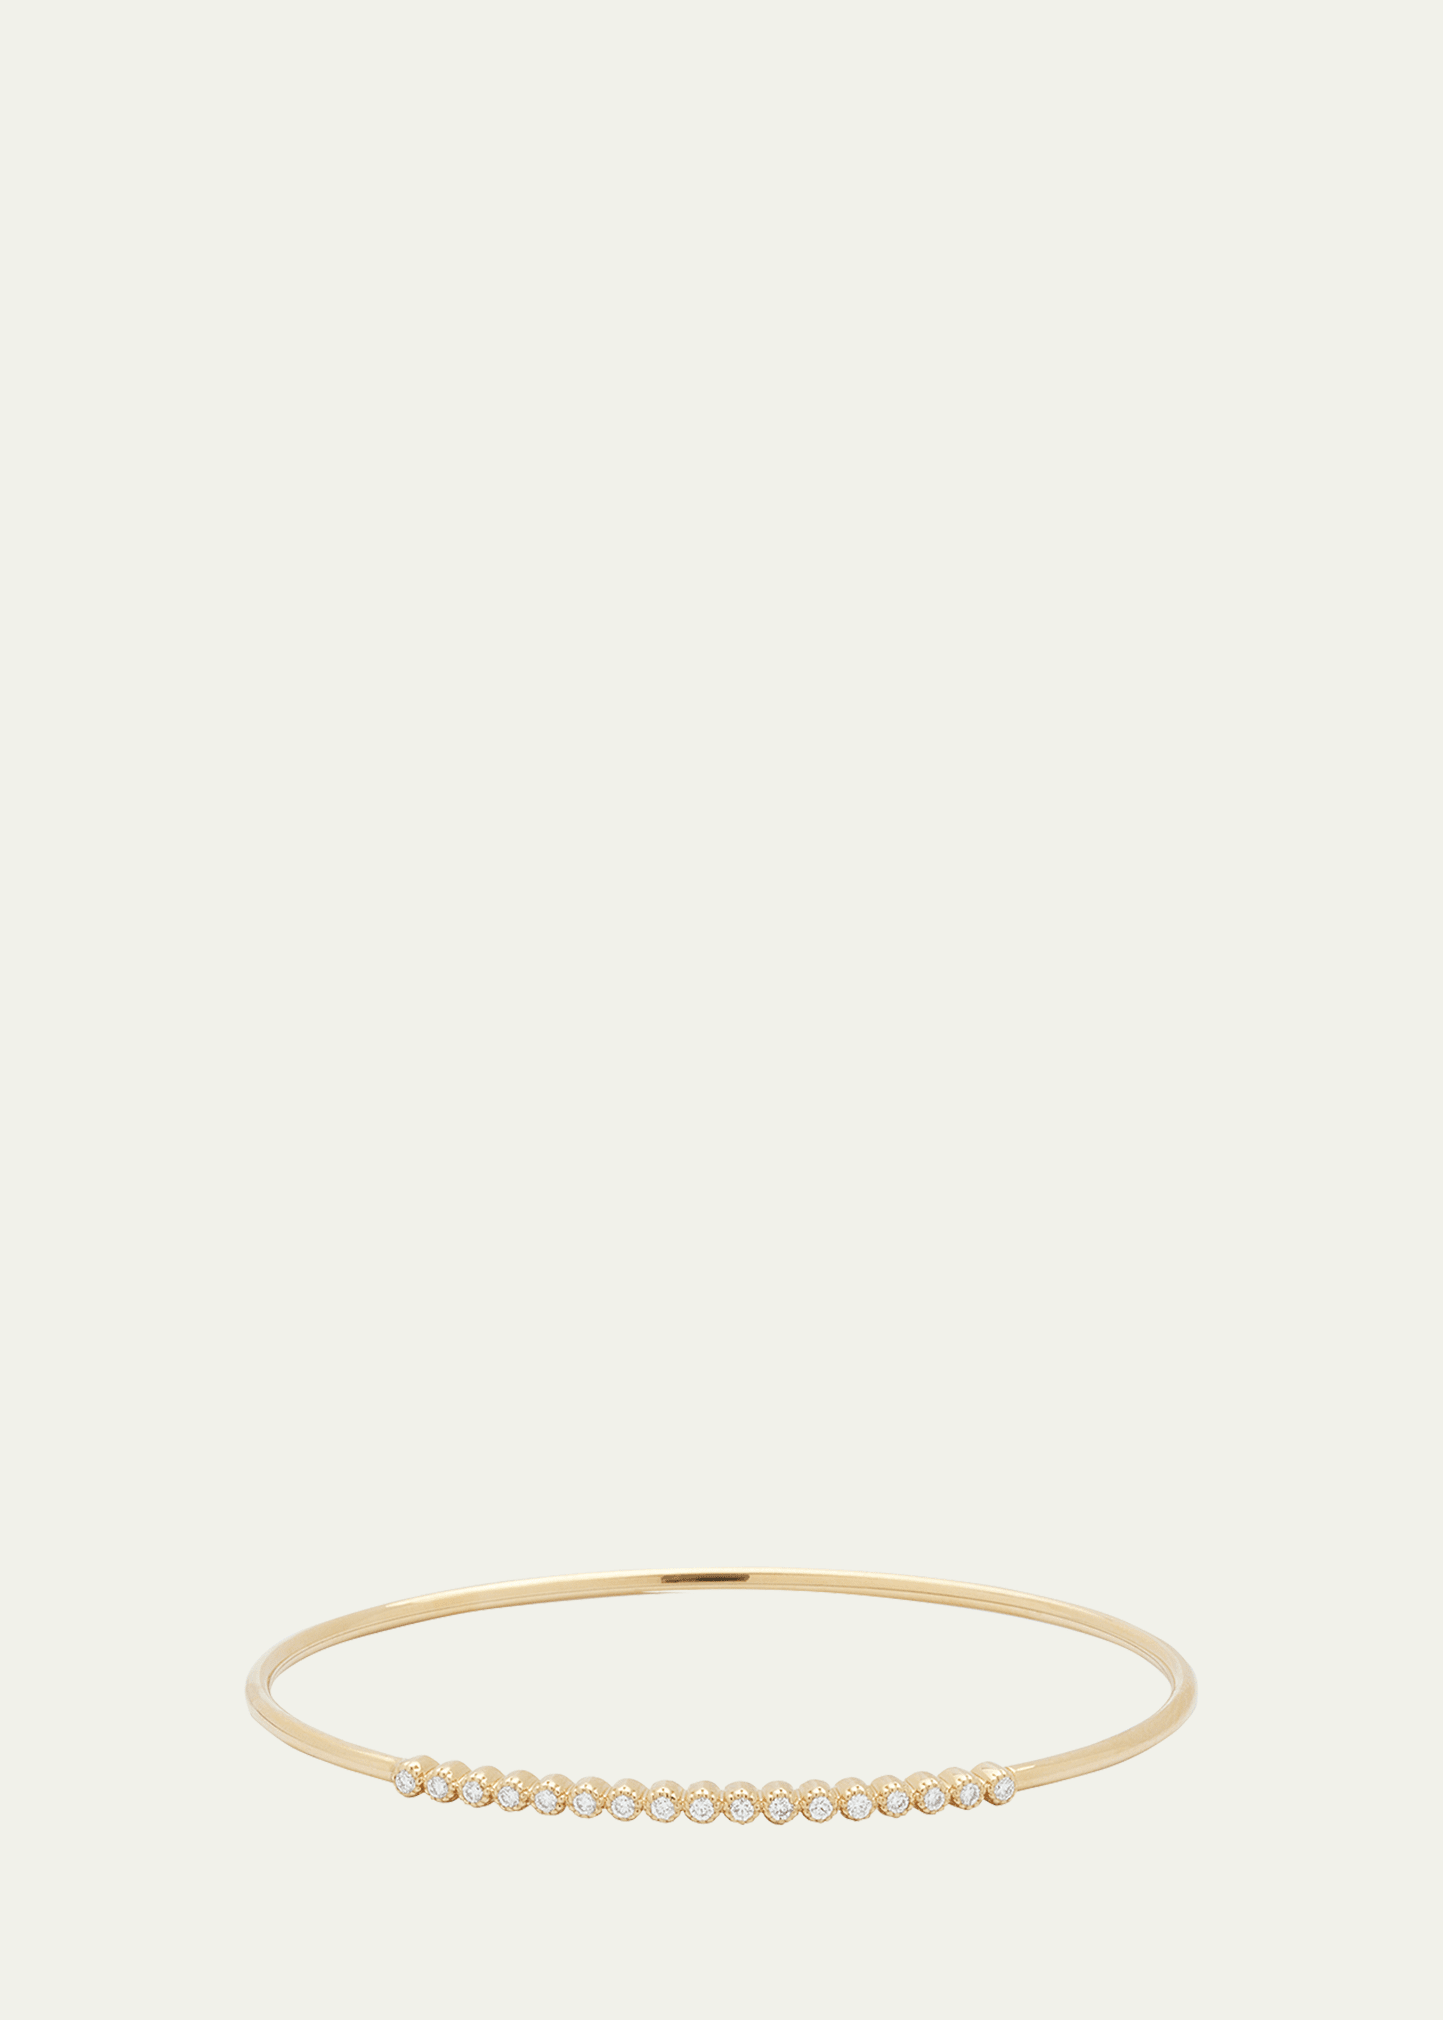 Flexible Stitch Tubing Bracelet in 18k Yellow Gold with Diamonds, Size M